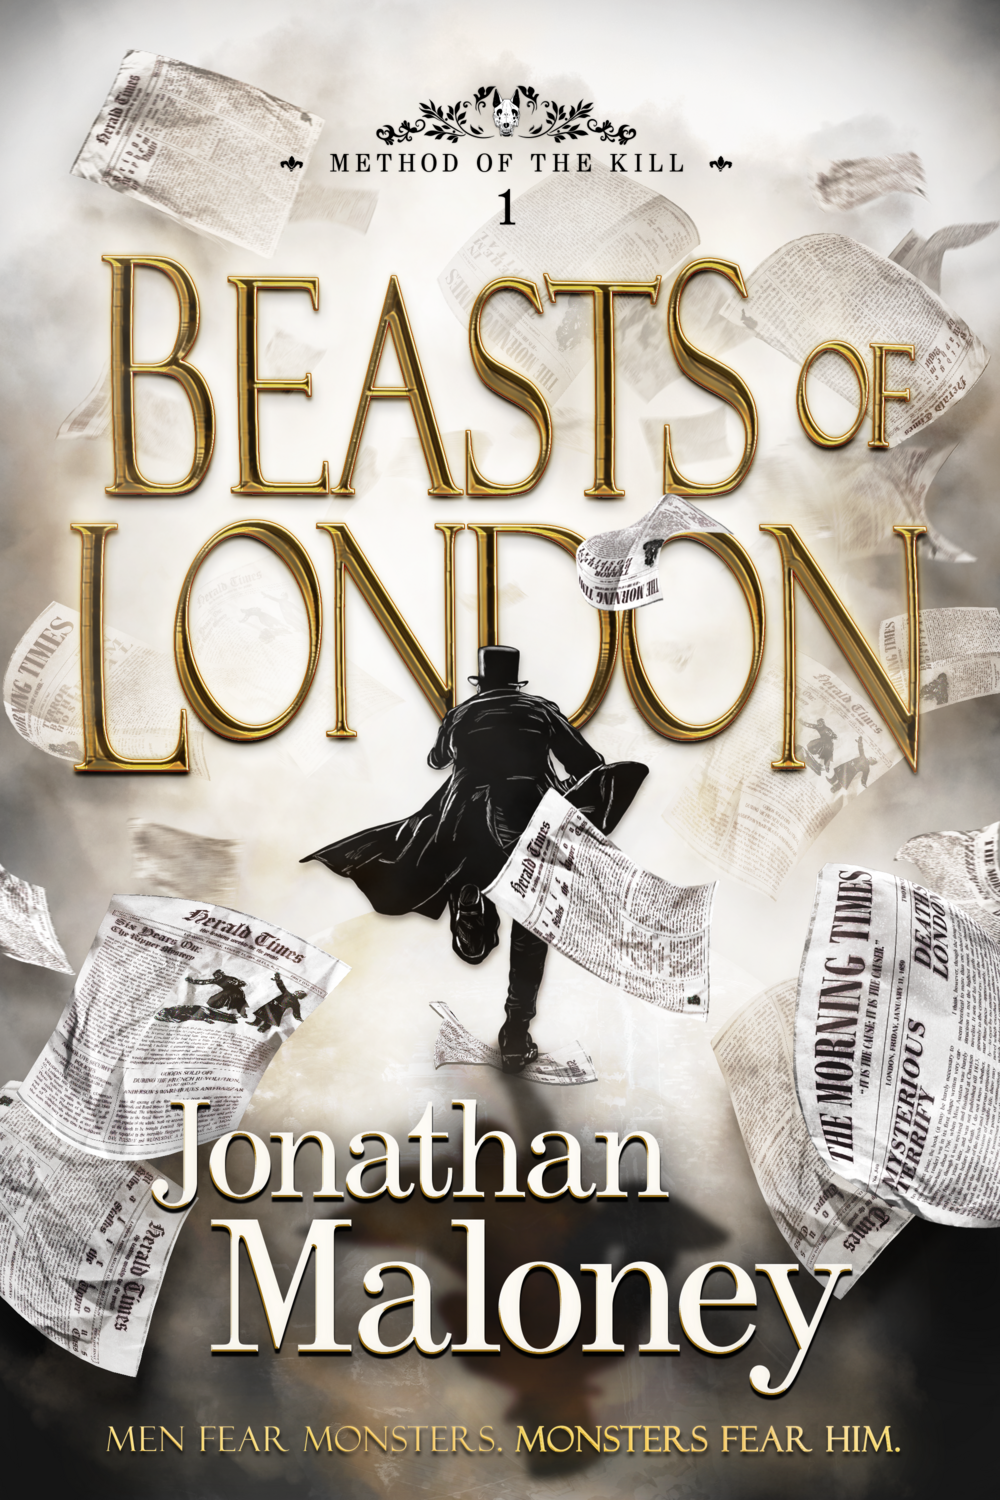 Beasts of London (Method of the Kill #1) by Jonathan Maloney